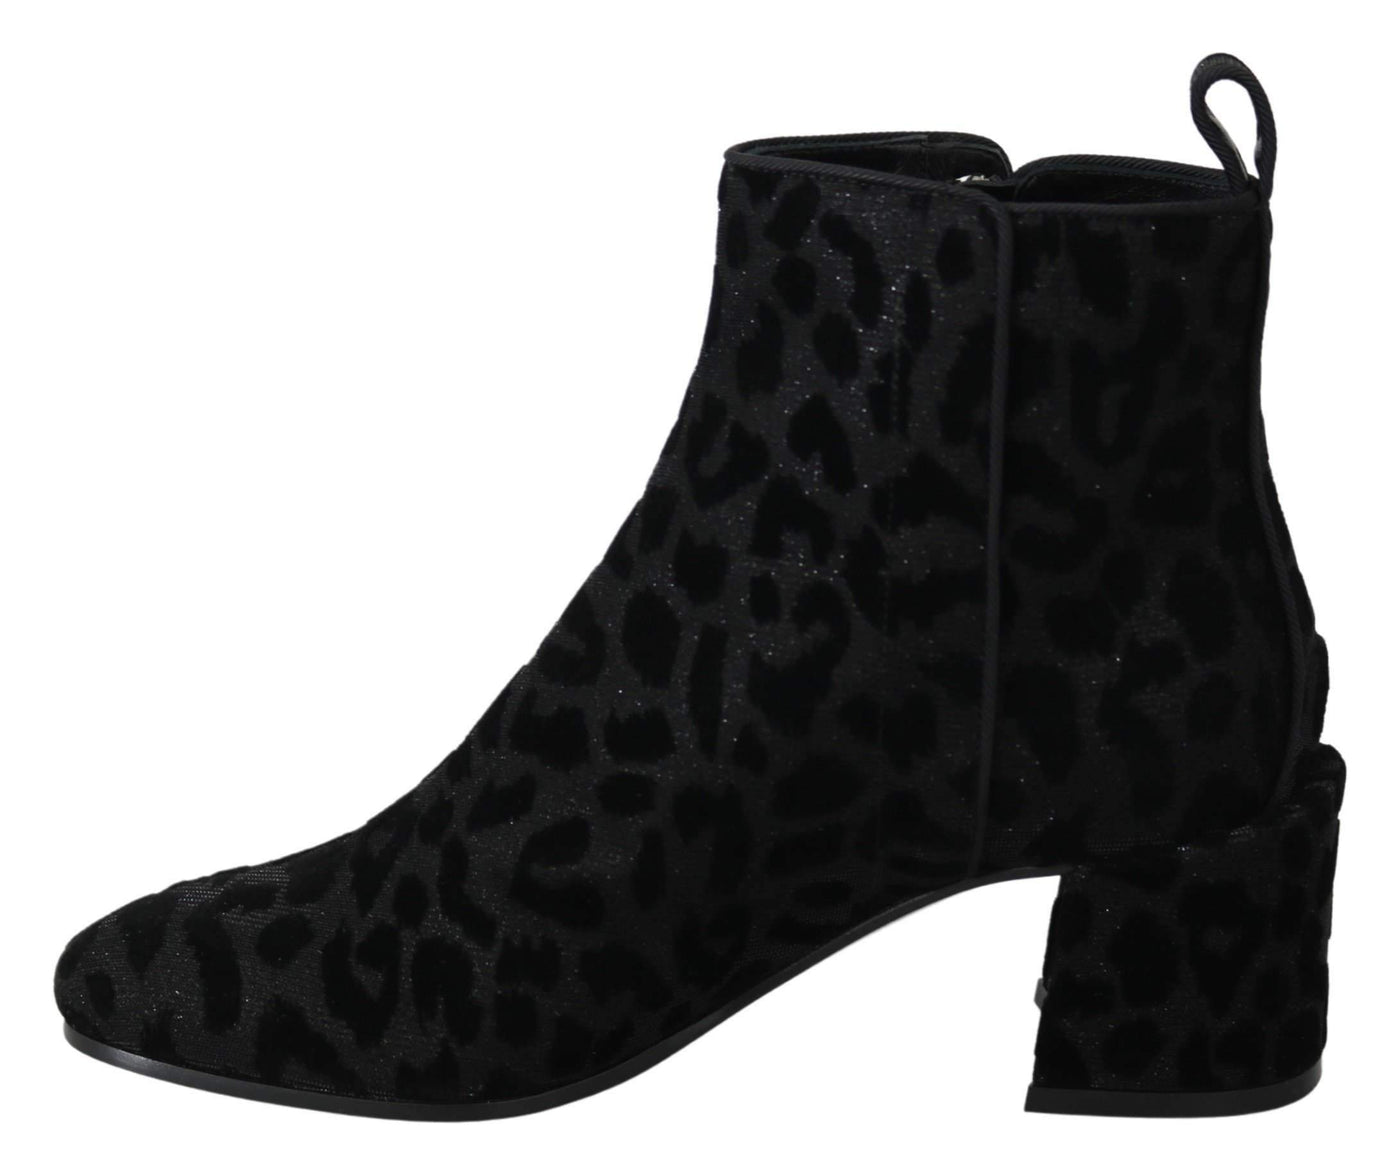 Dolce & Gabbana Black Leopard Short Boots Zipper Shoes #women, Black, Boots - Women - Shoes, Brand_Dolce & Gabbana, Dolce & Gabbana, EU36.5/US6, EU37.5/US7, EU38.5/US8, EU39.5/US9, feed-agegroup-adult, feed-color-black, feed-gender-female, feed-size-US6, feed-size-US7, feed-size-US8, feed-size-US9, Gender_Women, Shoes - New Arrivals at SEYMAYKA